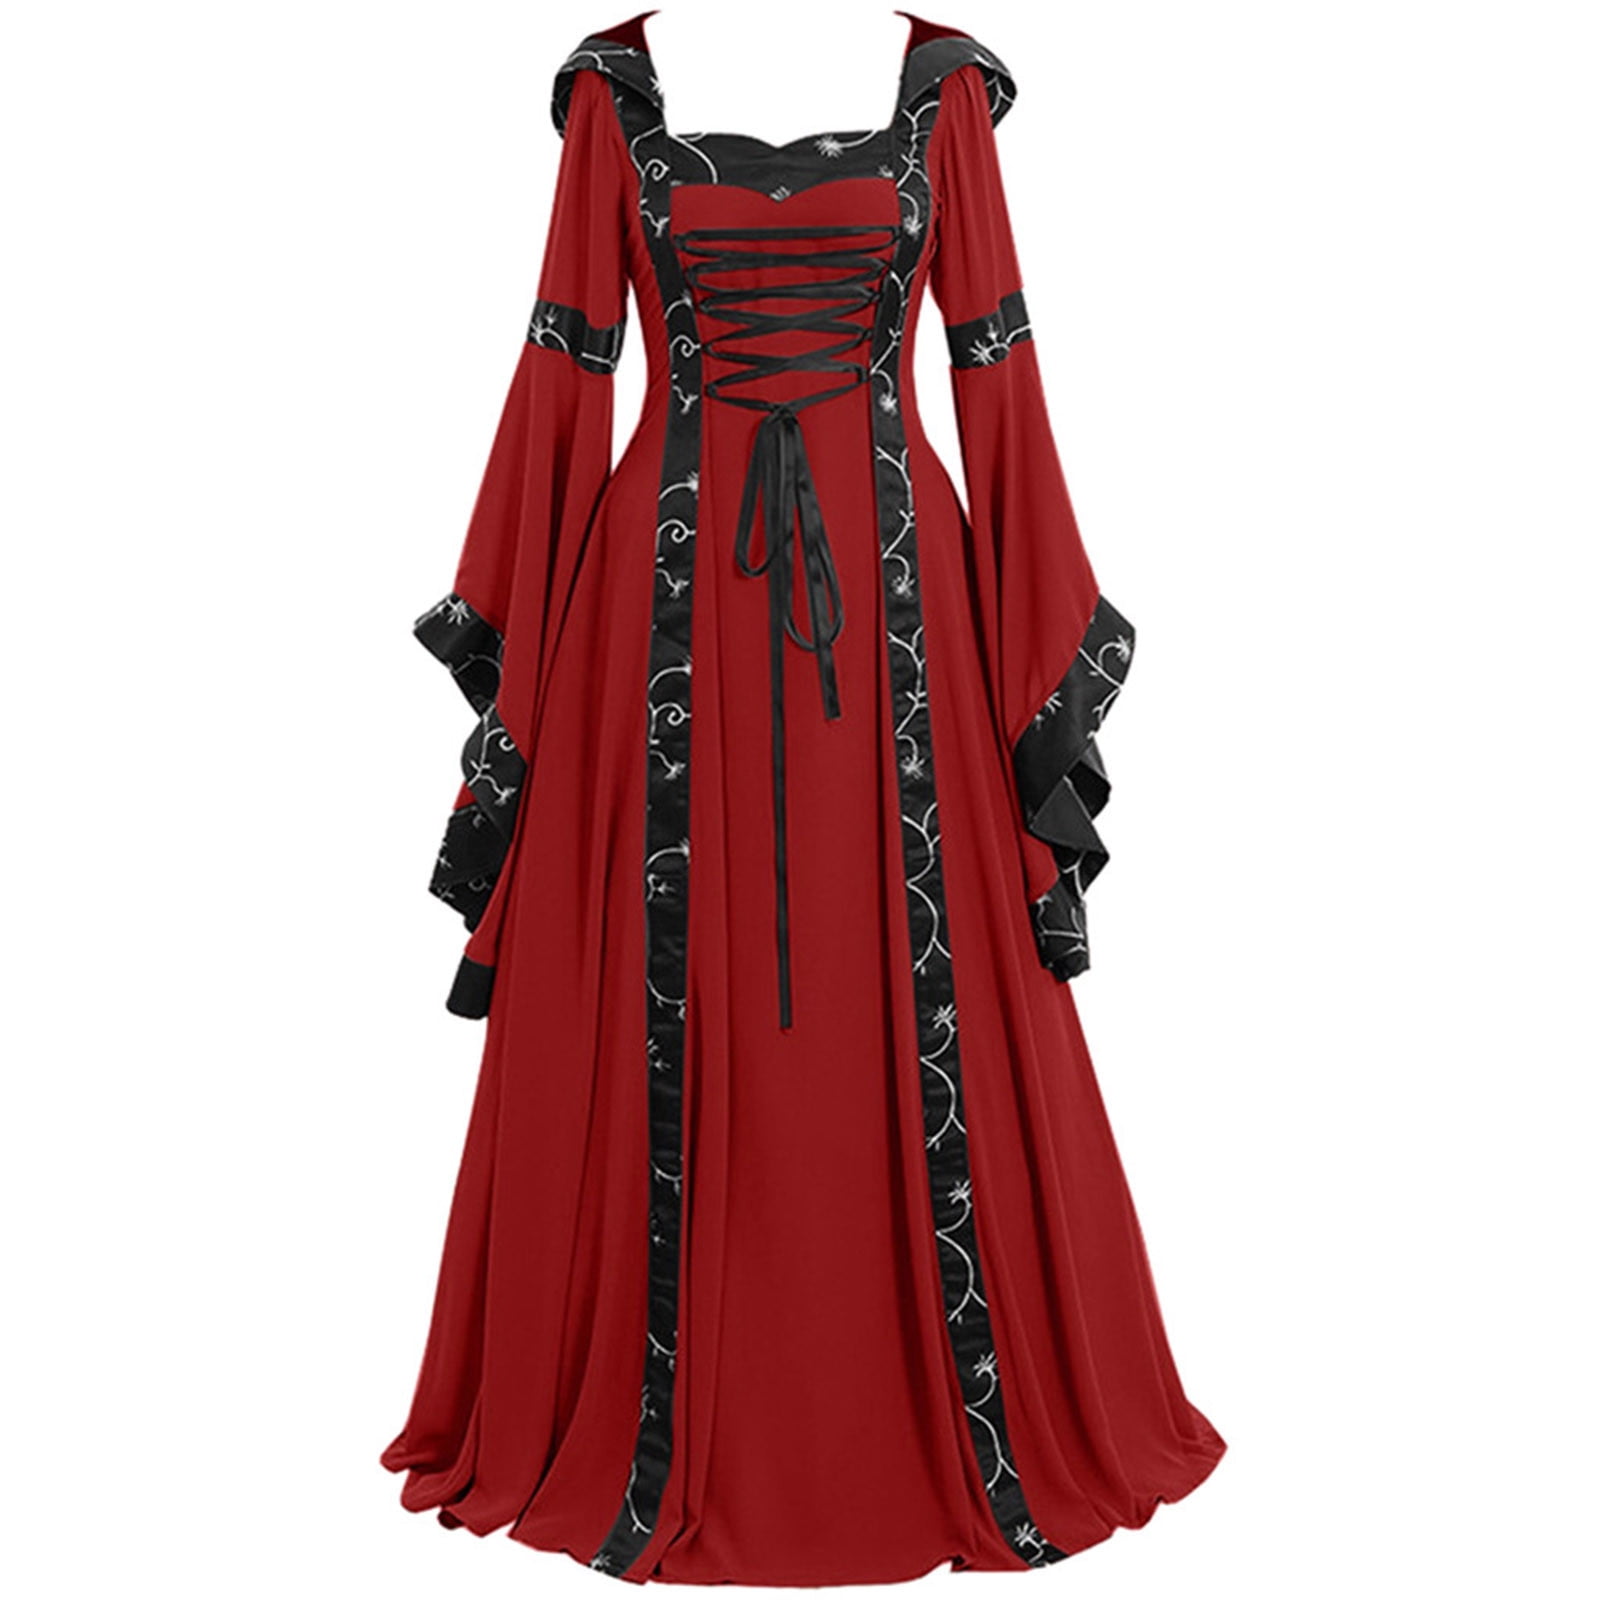 Virmaxy Women's Halloween Dresses Medieval Vintage Queen Princess